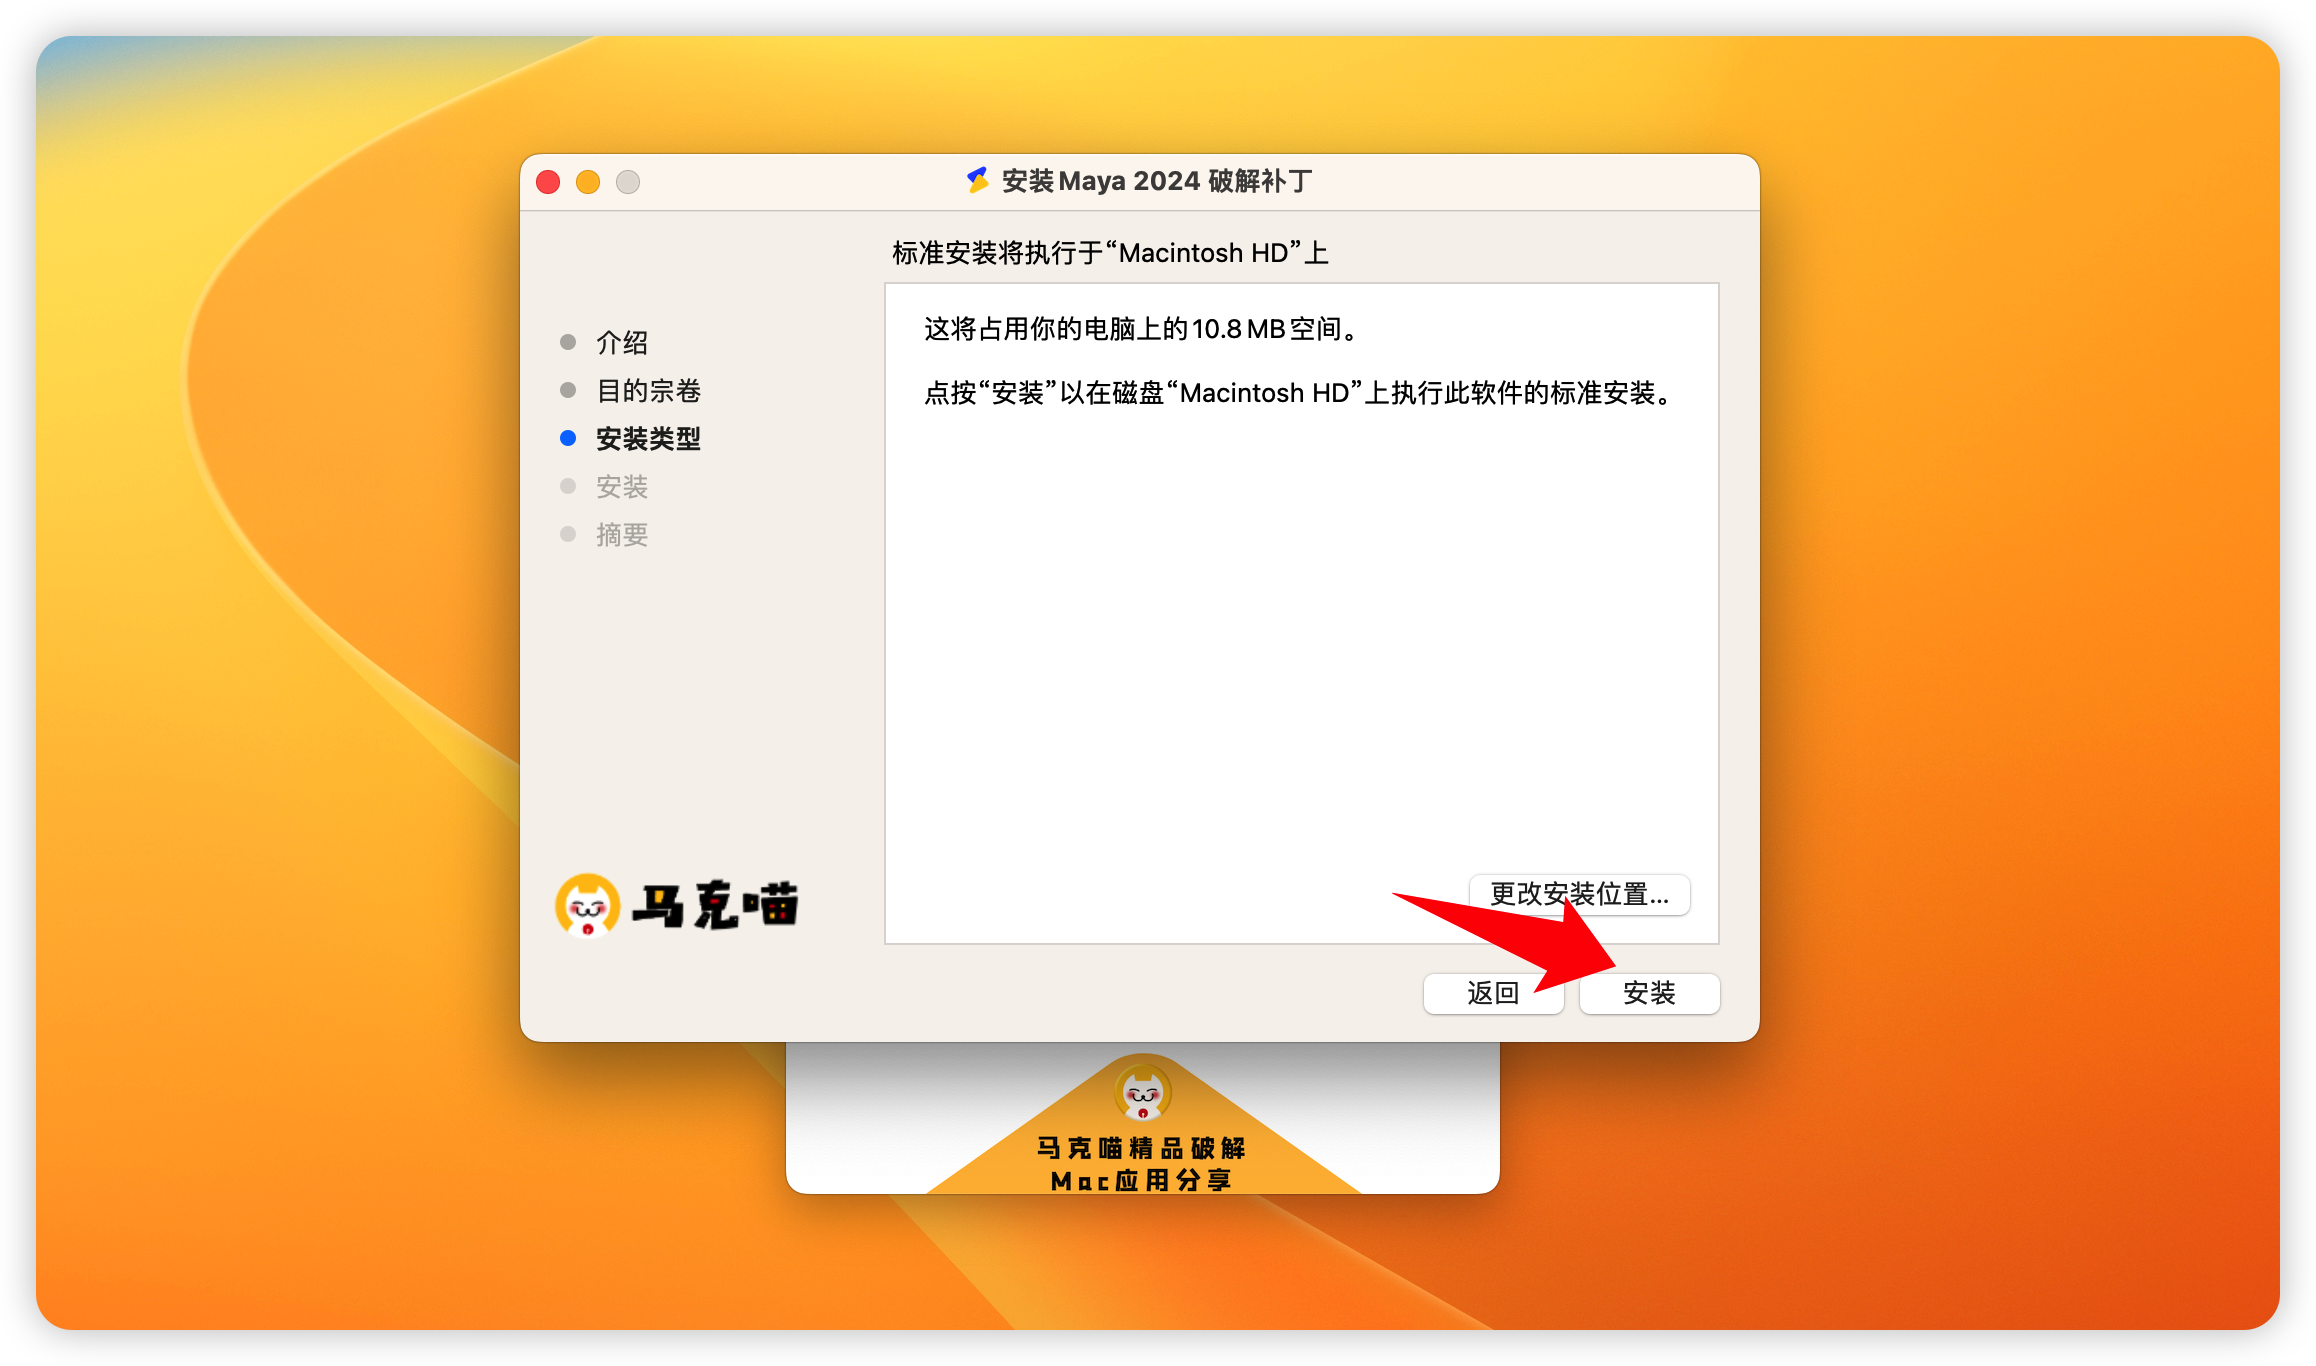 Autodesk Maya 2024 for Mac v2024中文永久破解版 三维动画和视觉特效软件 支持intel/M1/M2